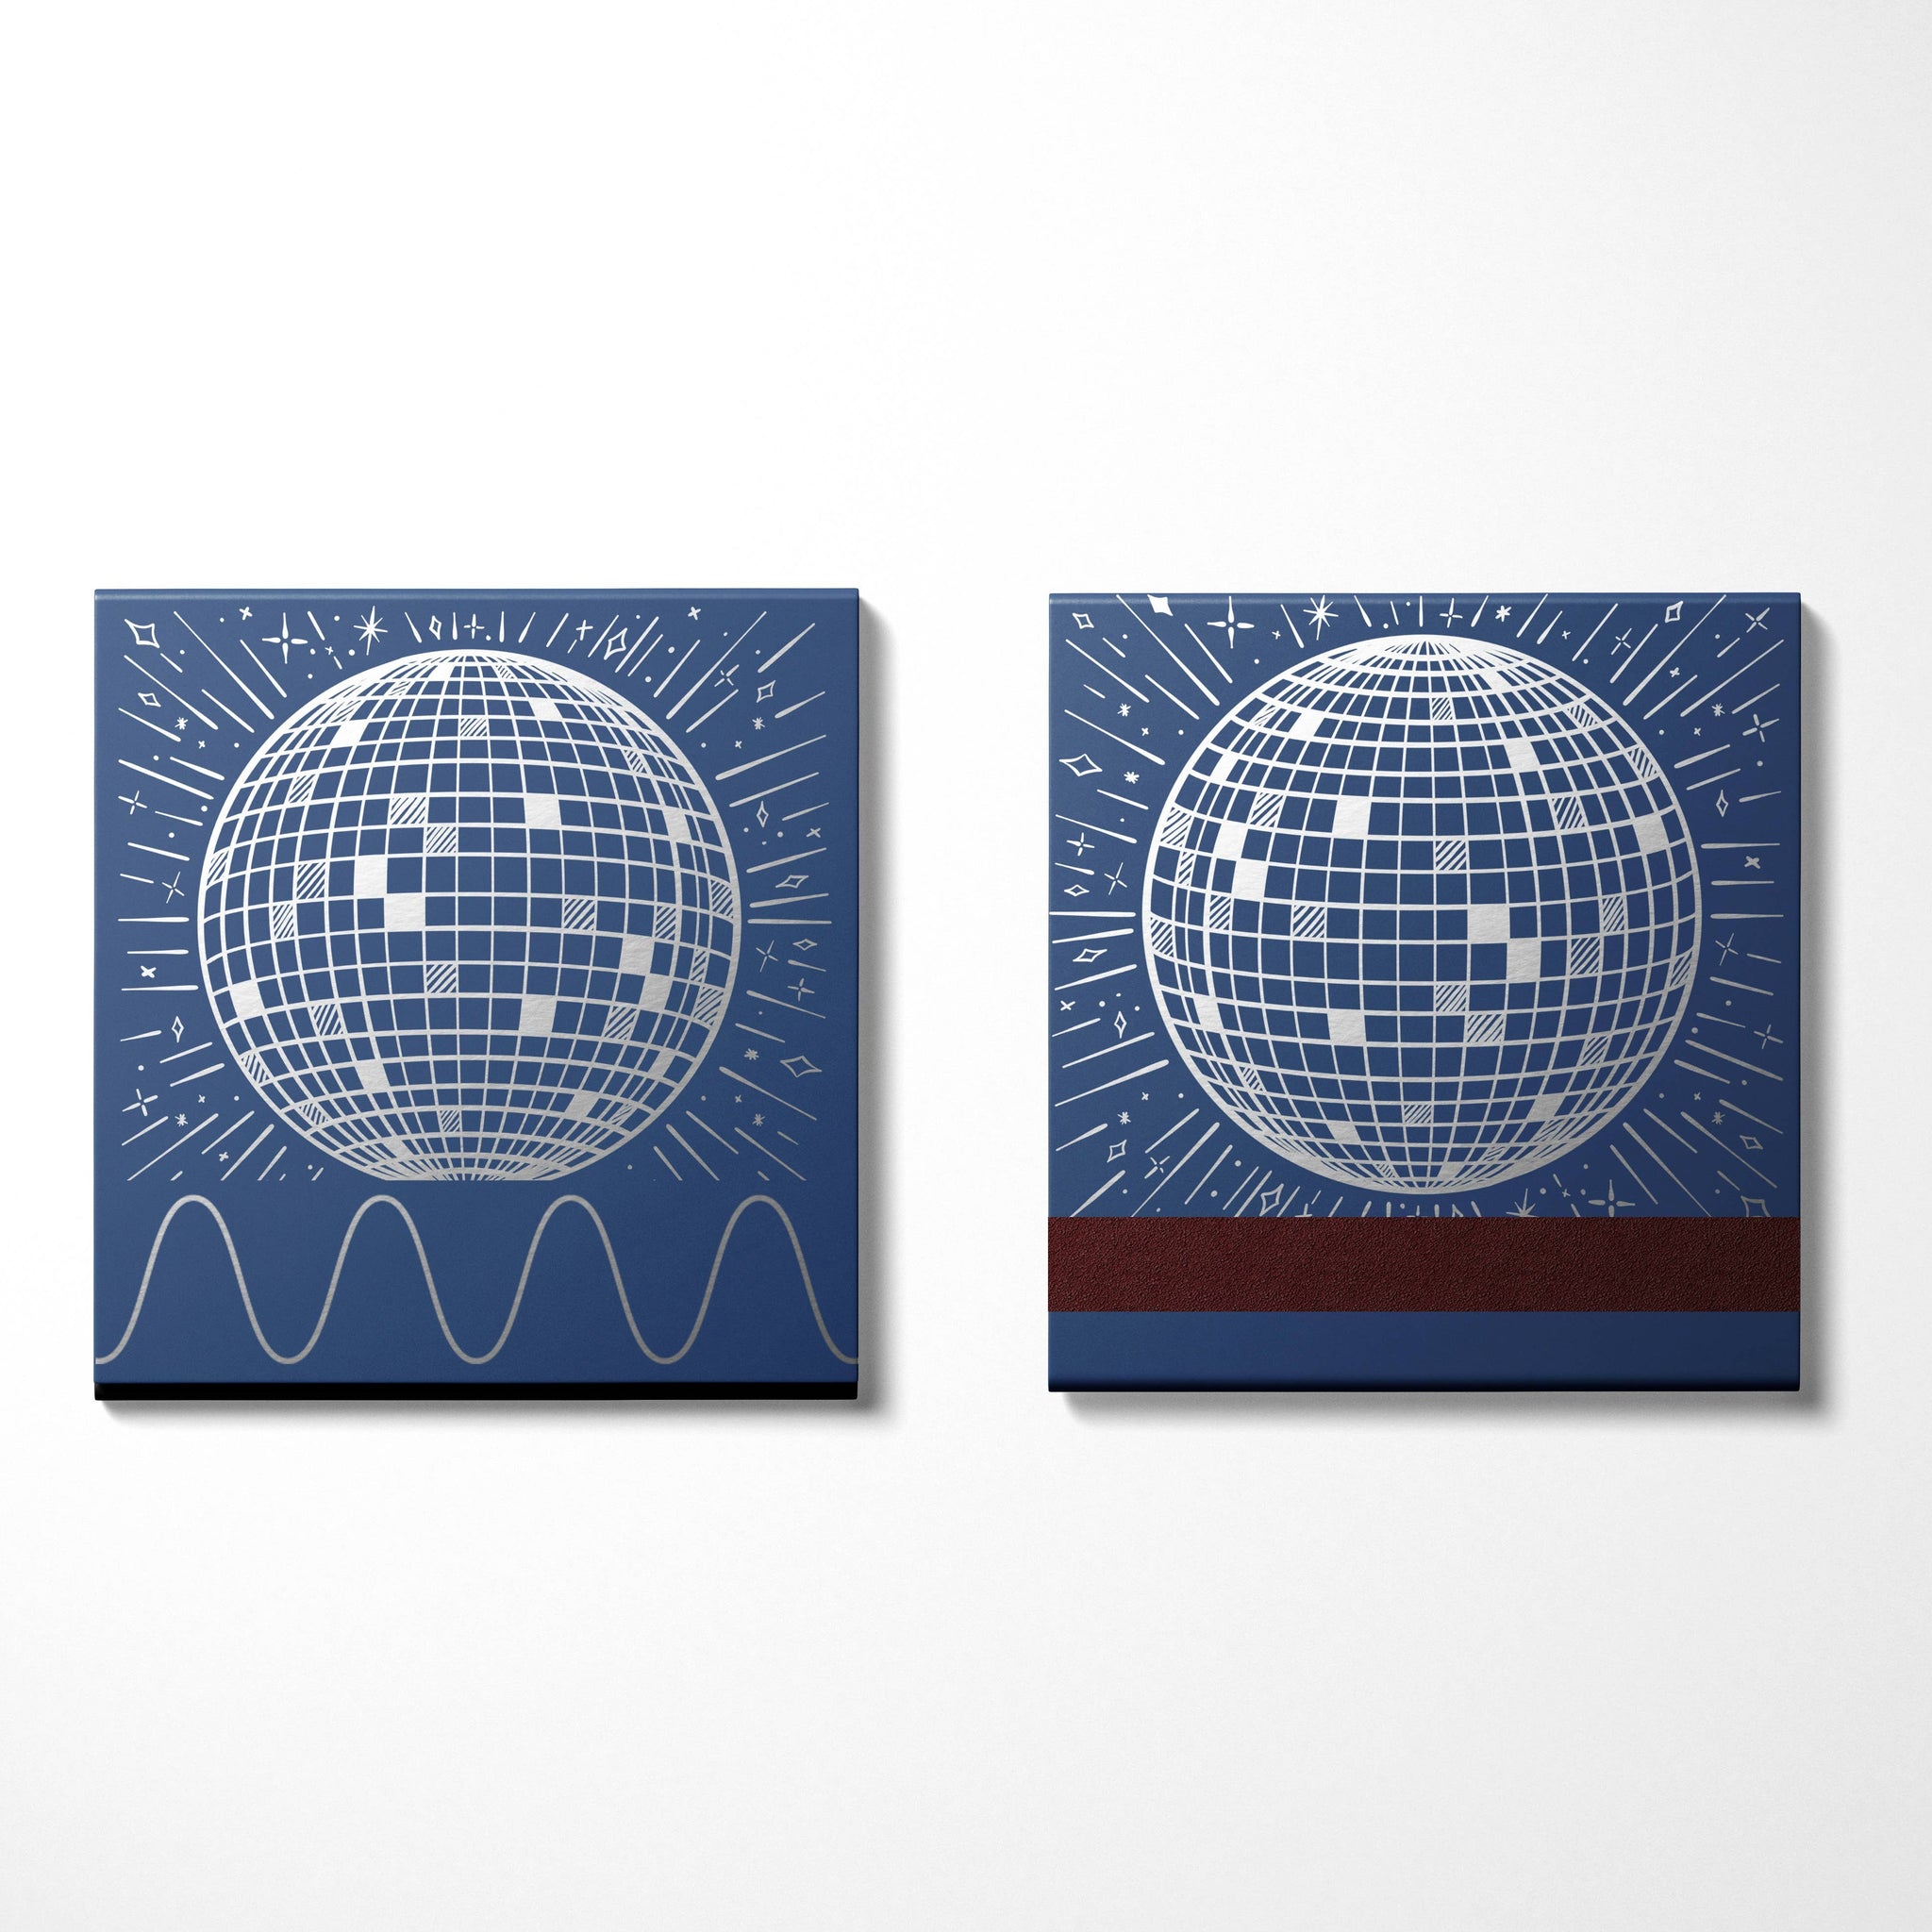 Disco Ball Printed Matchbooks